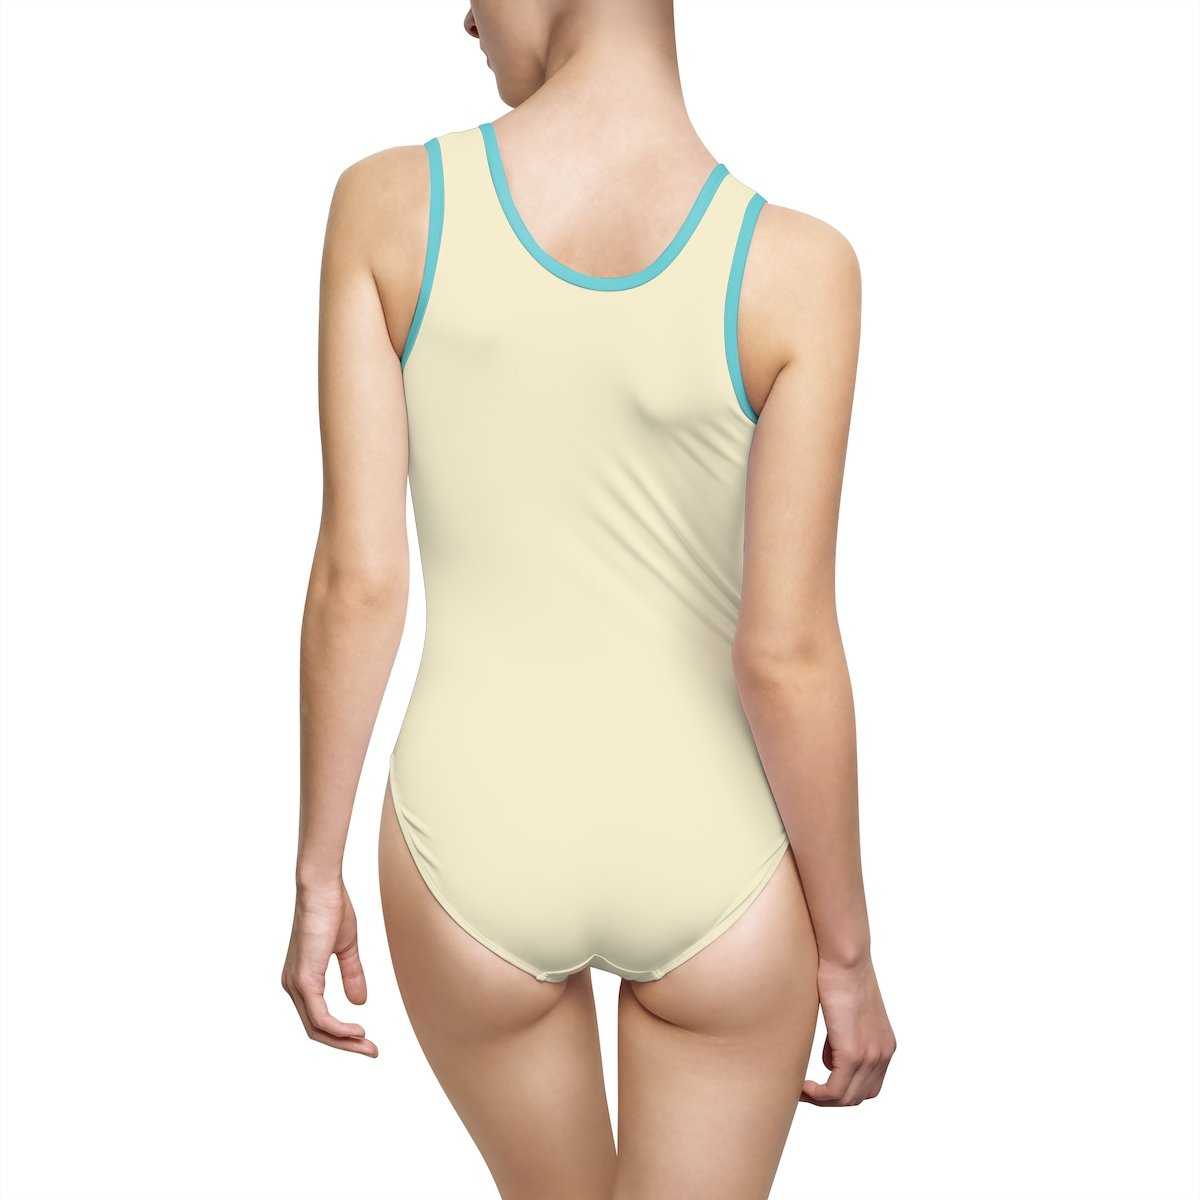 FREAK Swimsuit - Reminiscent of Sunset I - shopcontrabrands.com